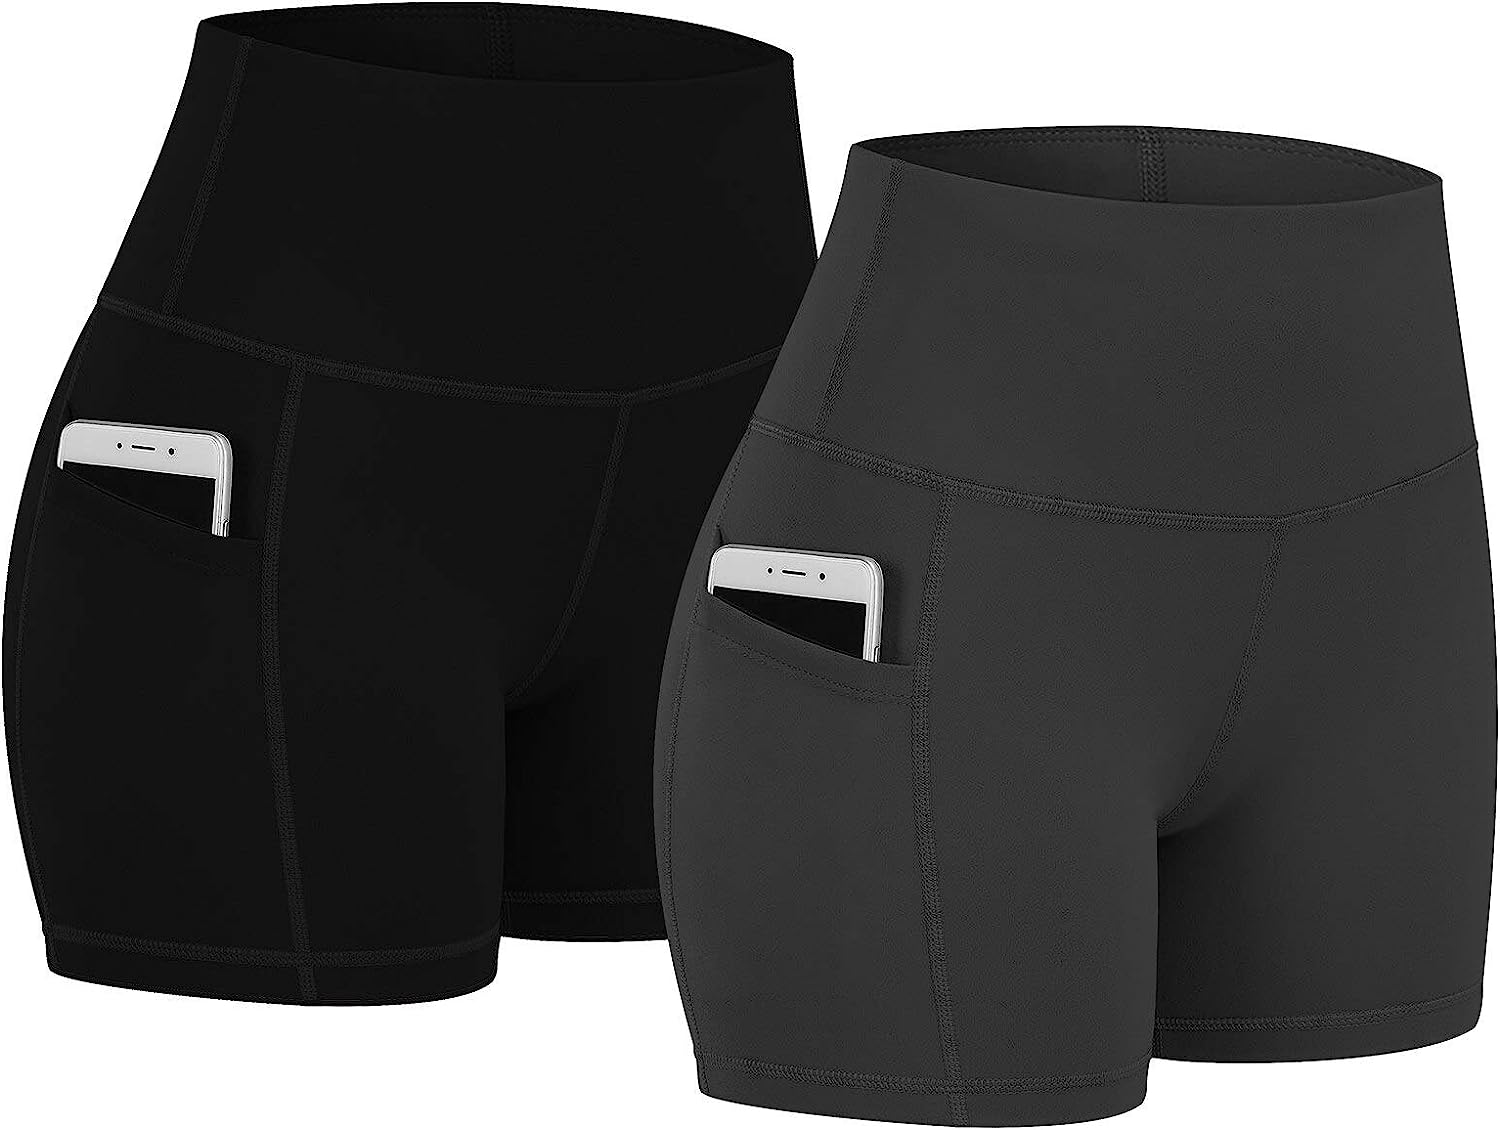 Buy Fengbay 3 Pack High Waist Yoga Pants, Pocket Yoga Pants